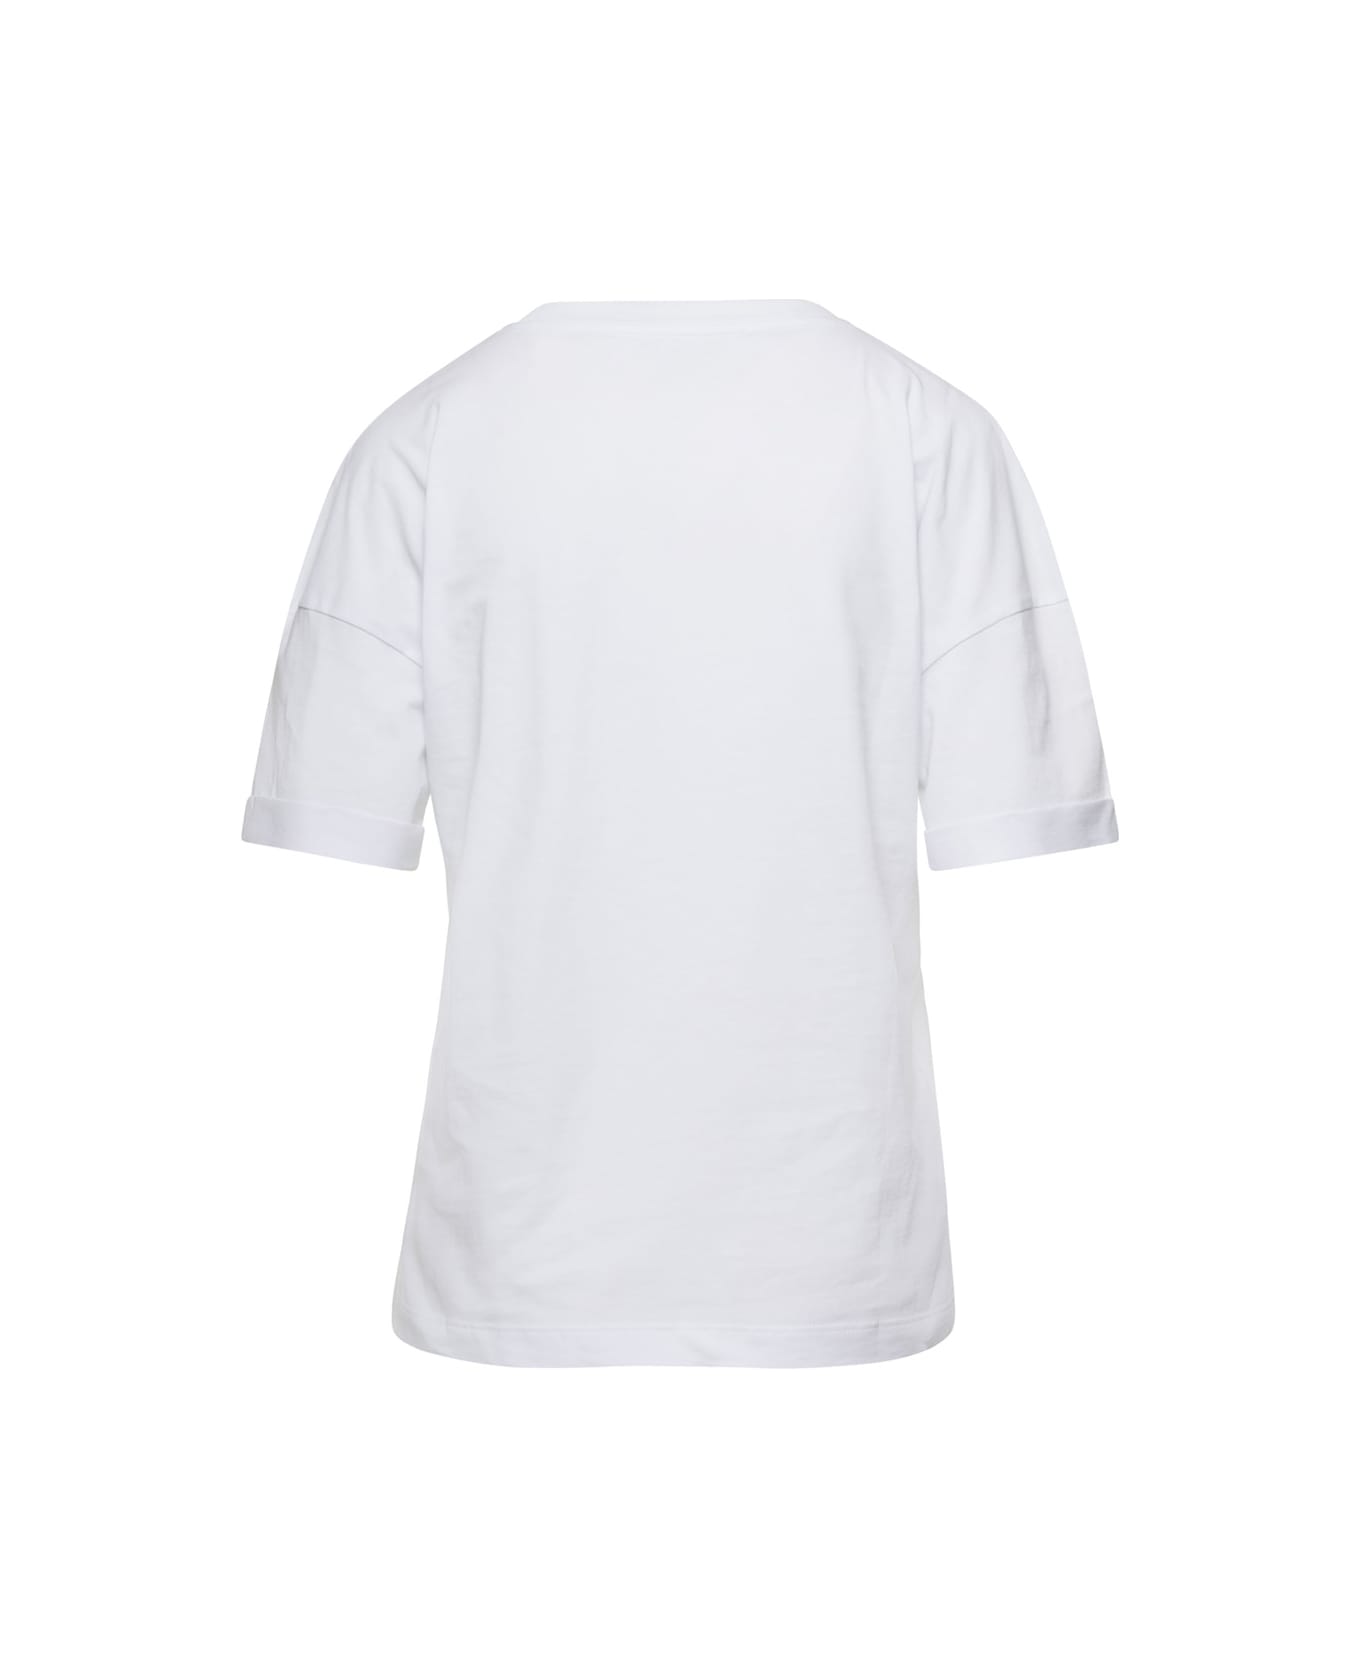 Federica Tosi White Crewneck T-shirt In Cotton Woman - White Tシャツ